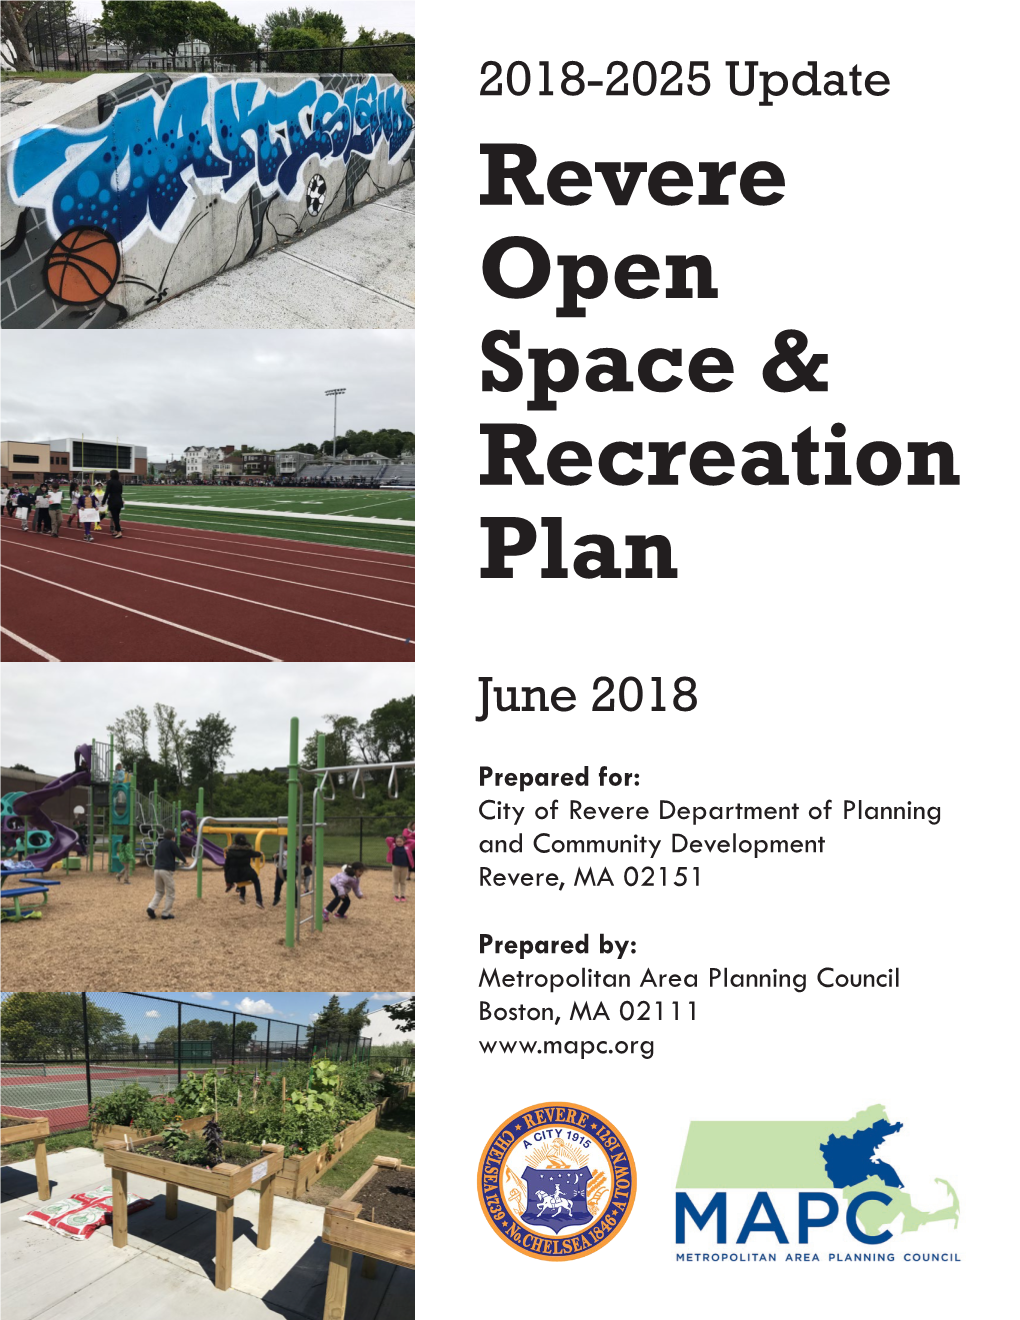 Revere Open Space & Recreation Plan